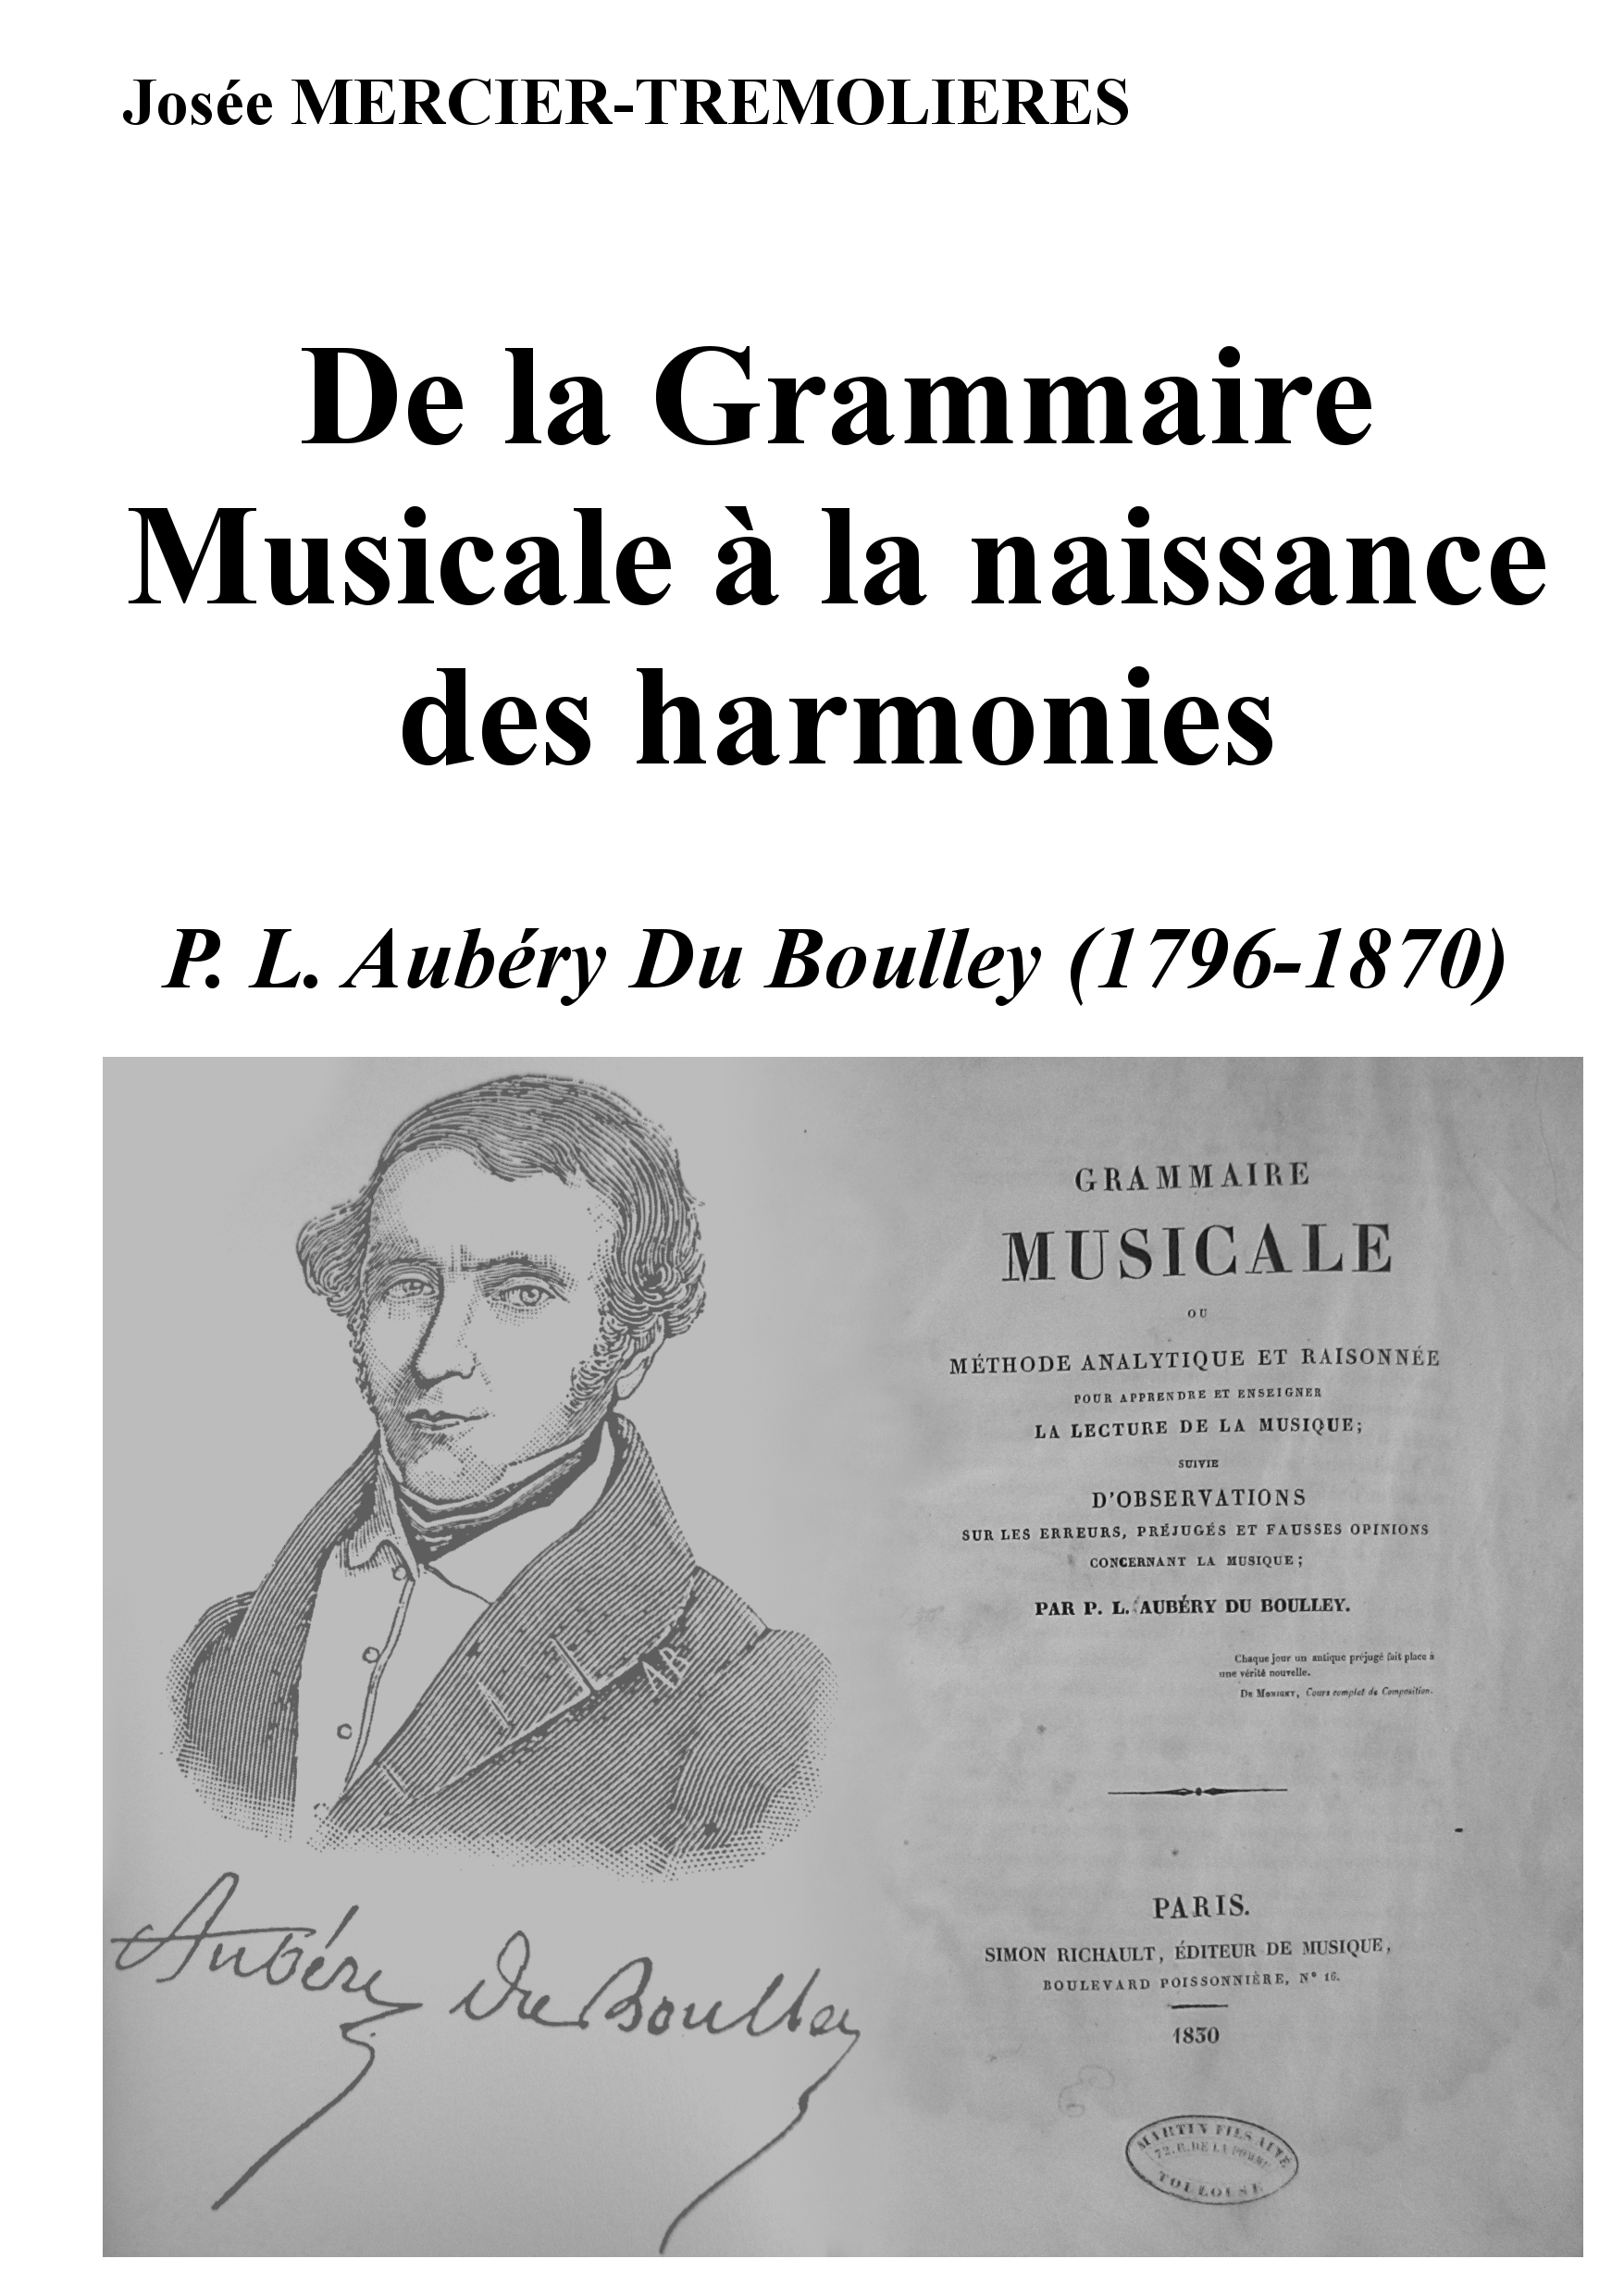 Grammaire Musicale et Harmonies